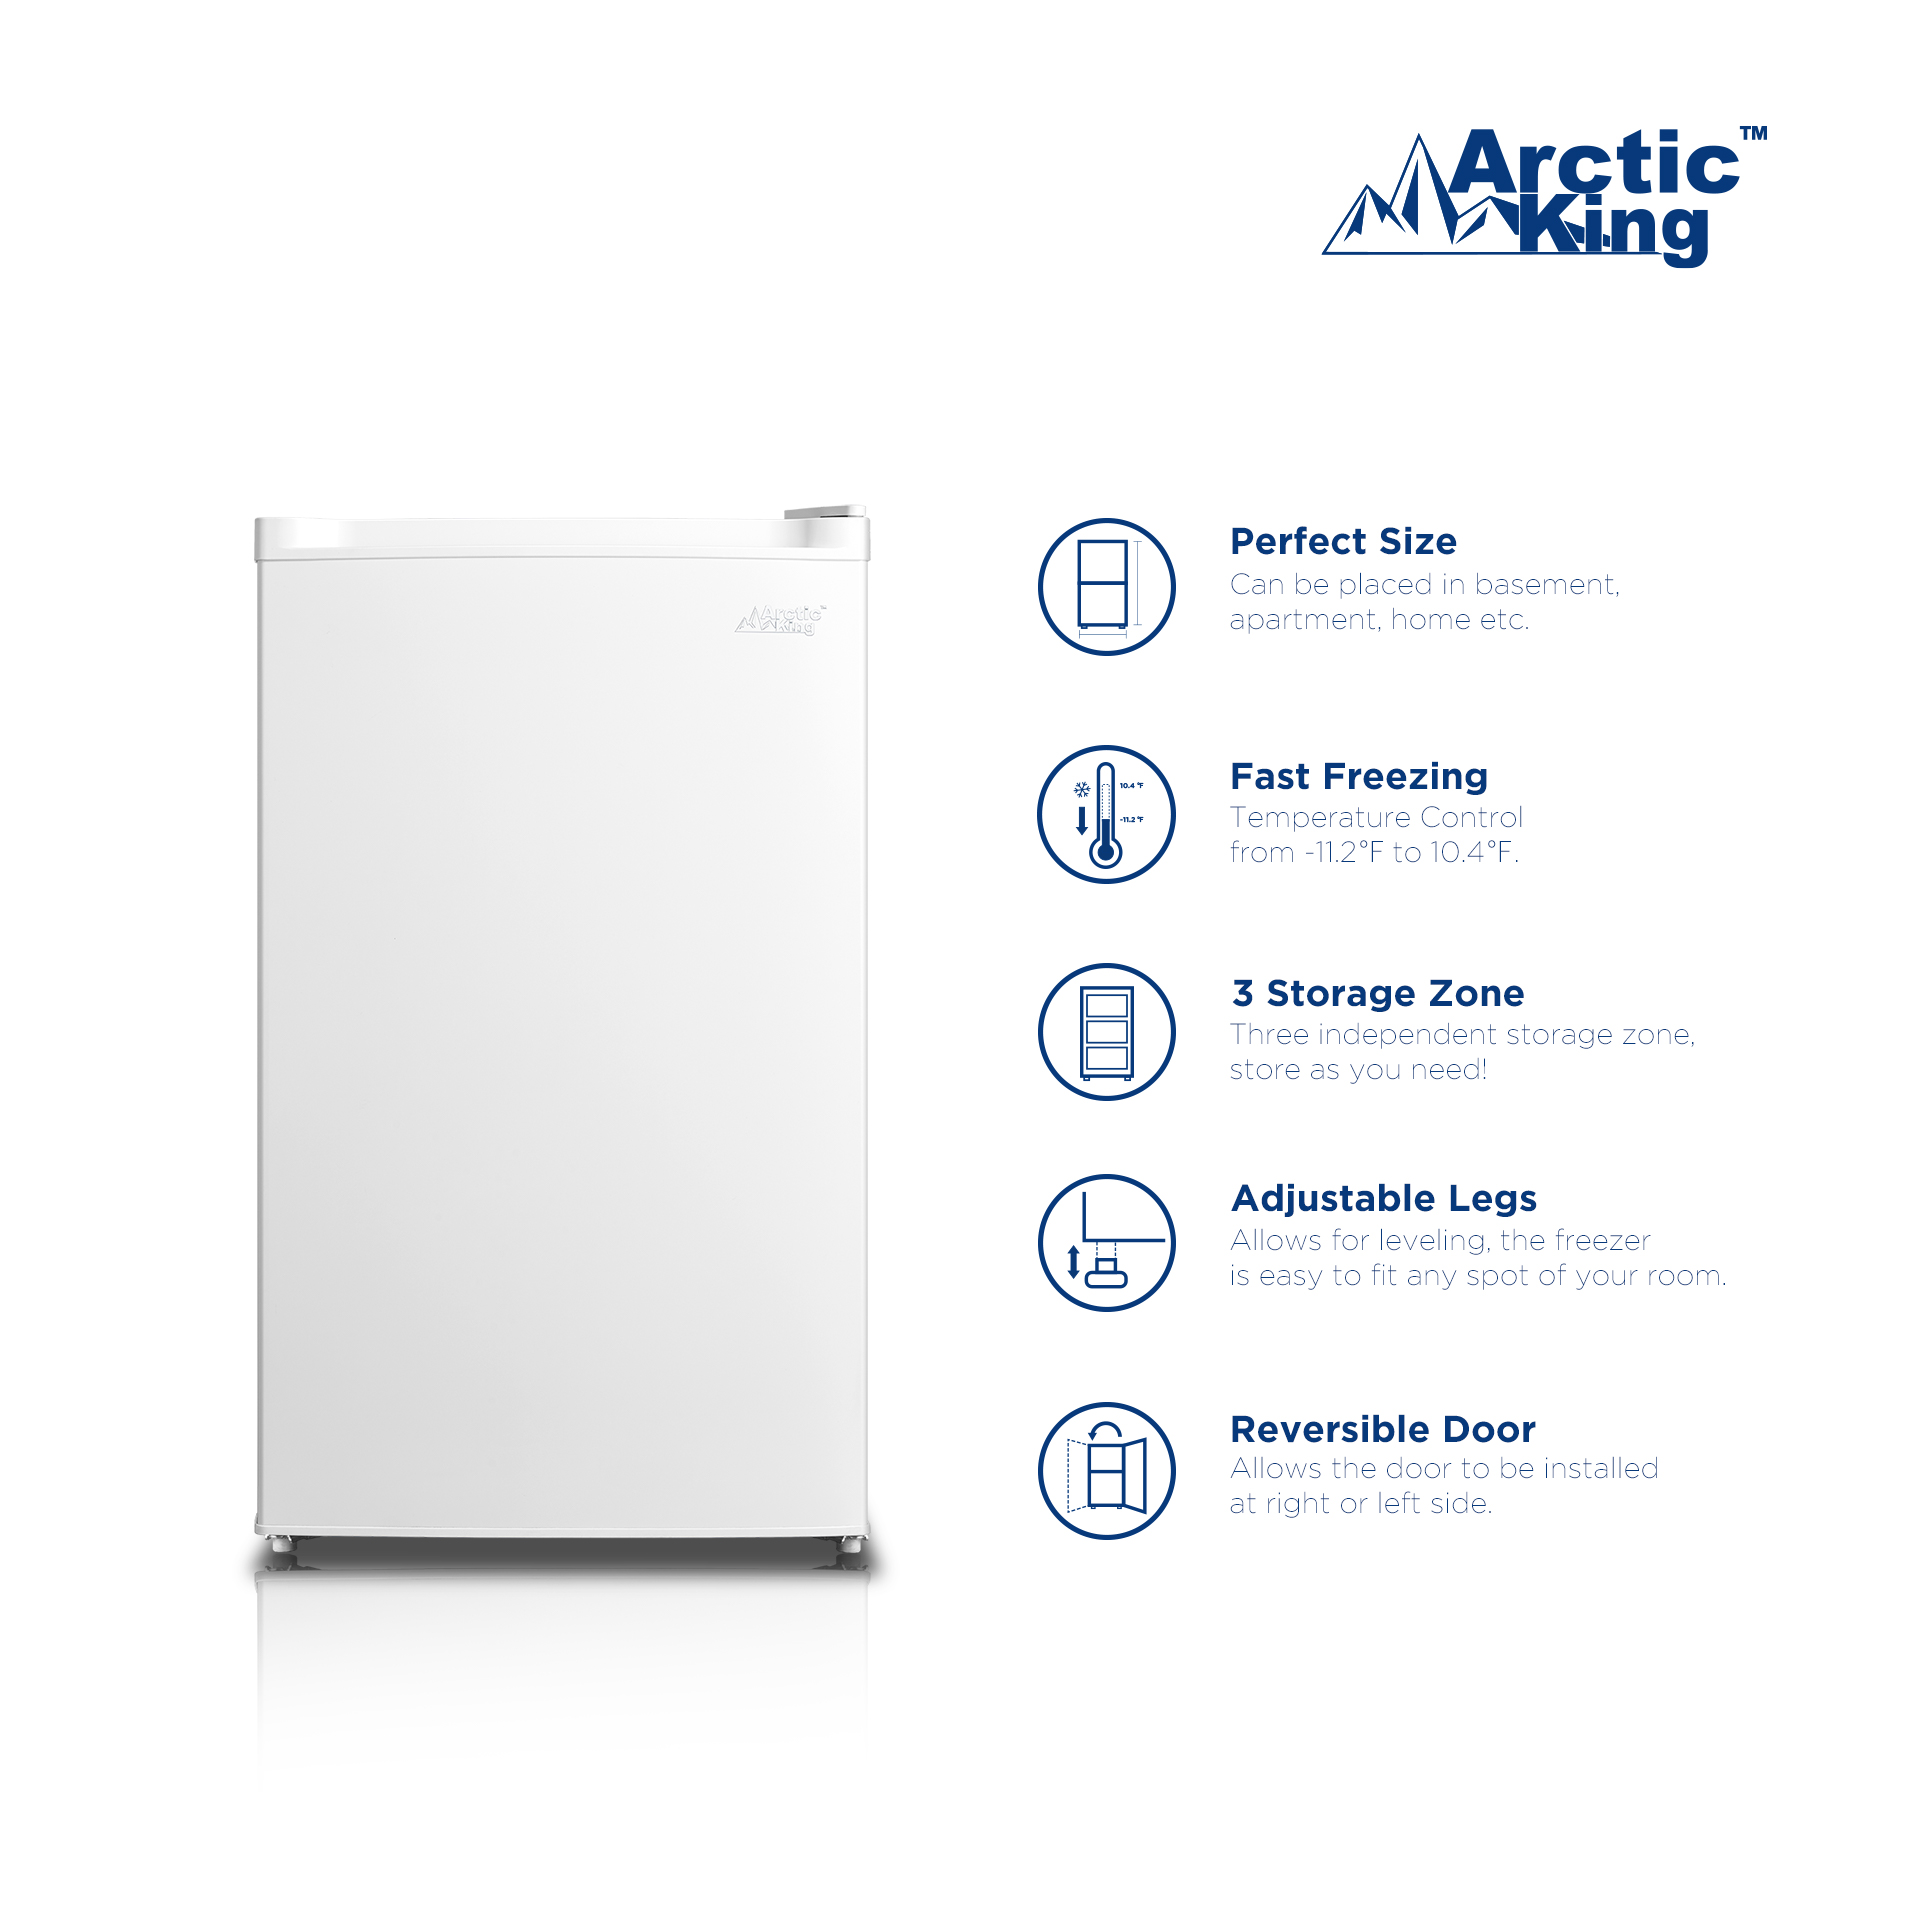 Arctic King 3.0 Cu ft Upright Freezer White, E-Star, ARU030S1ARWW - image 2 of 15